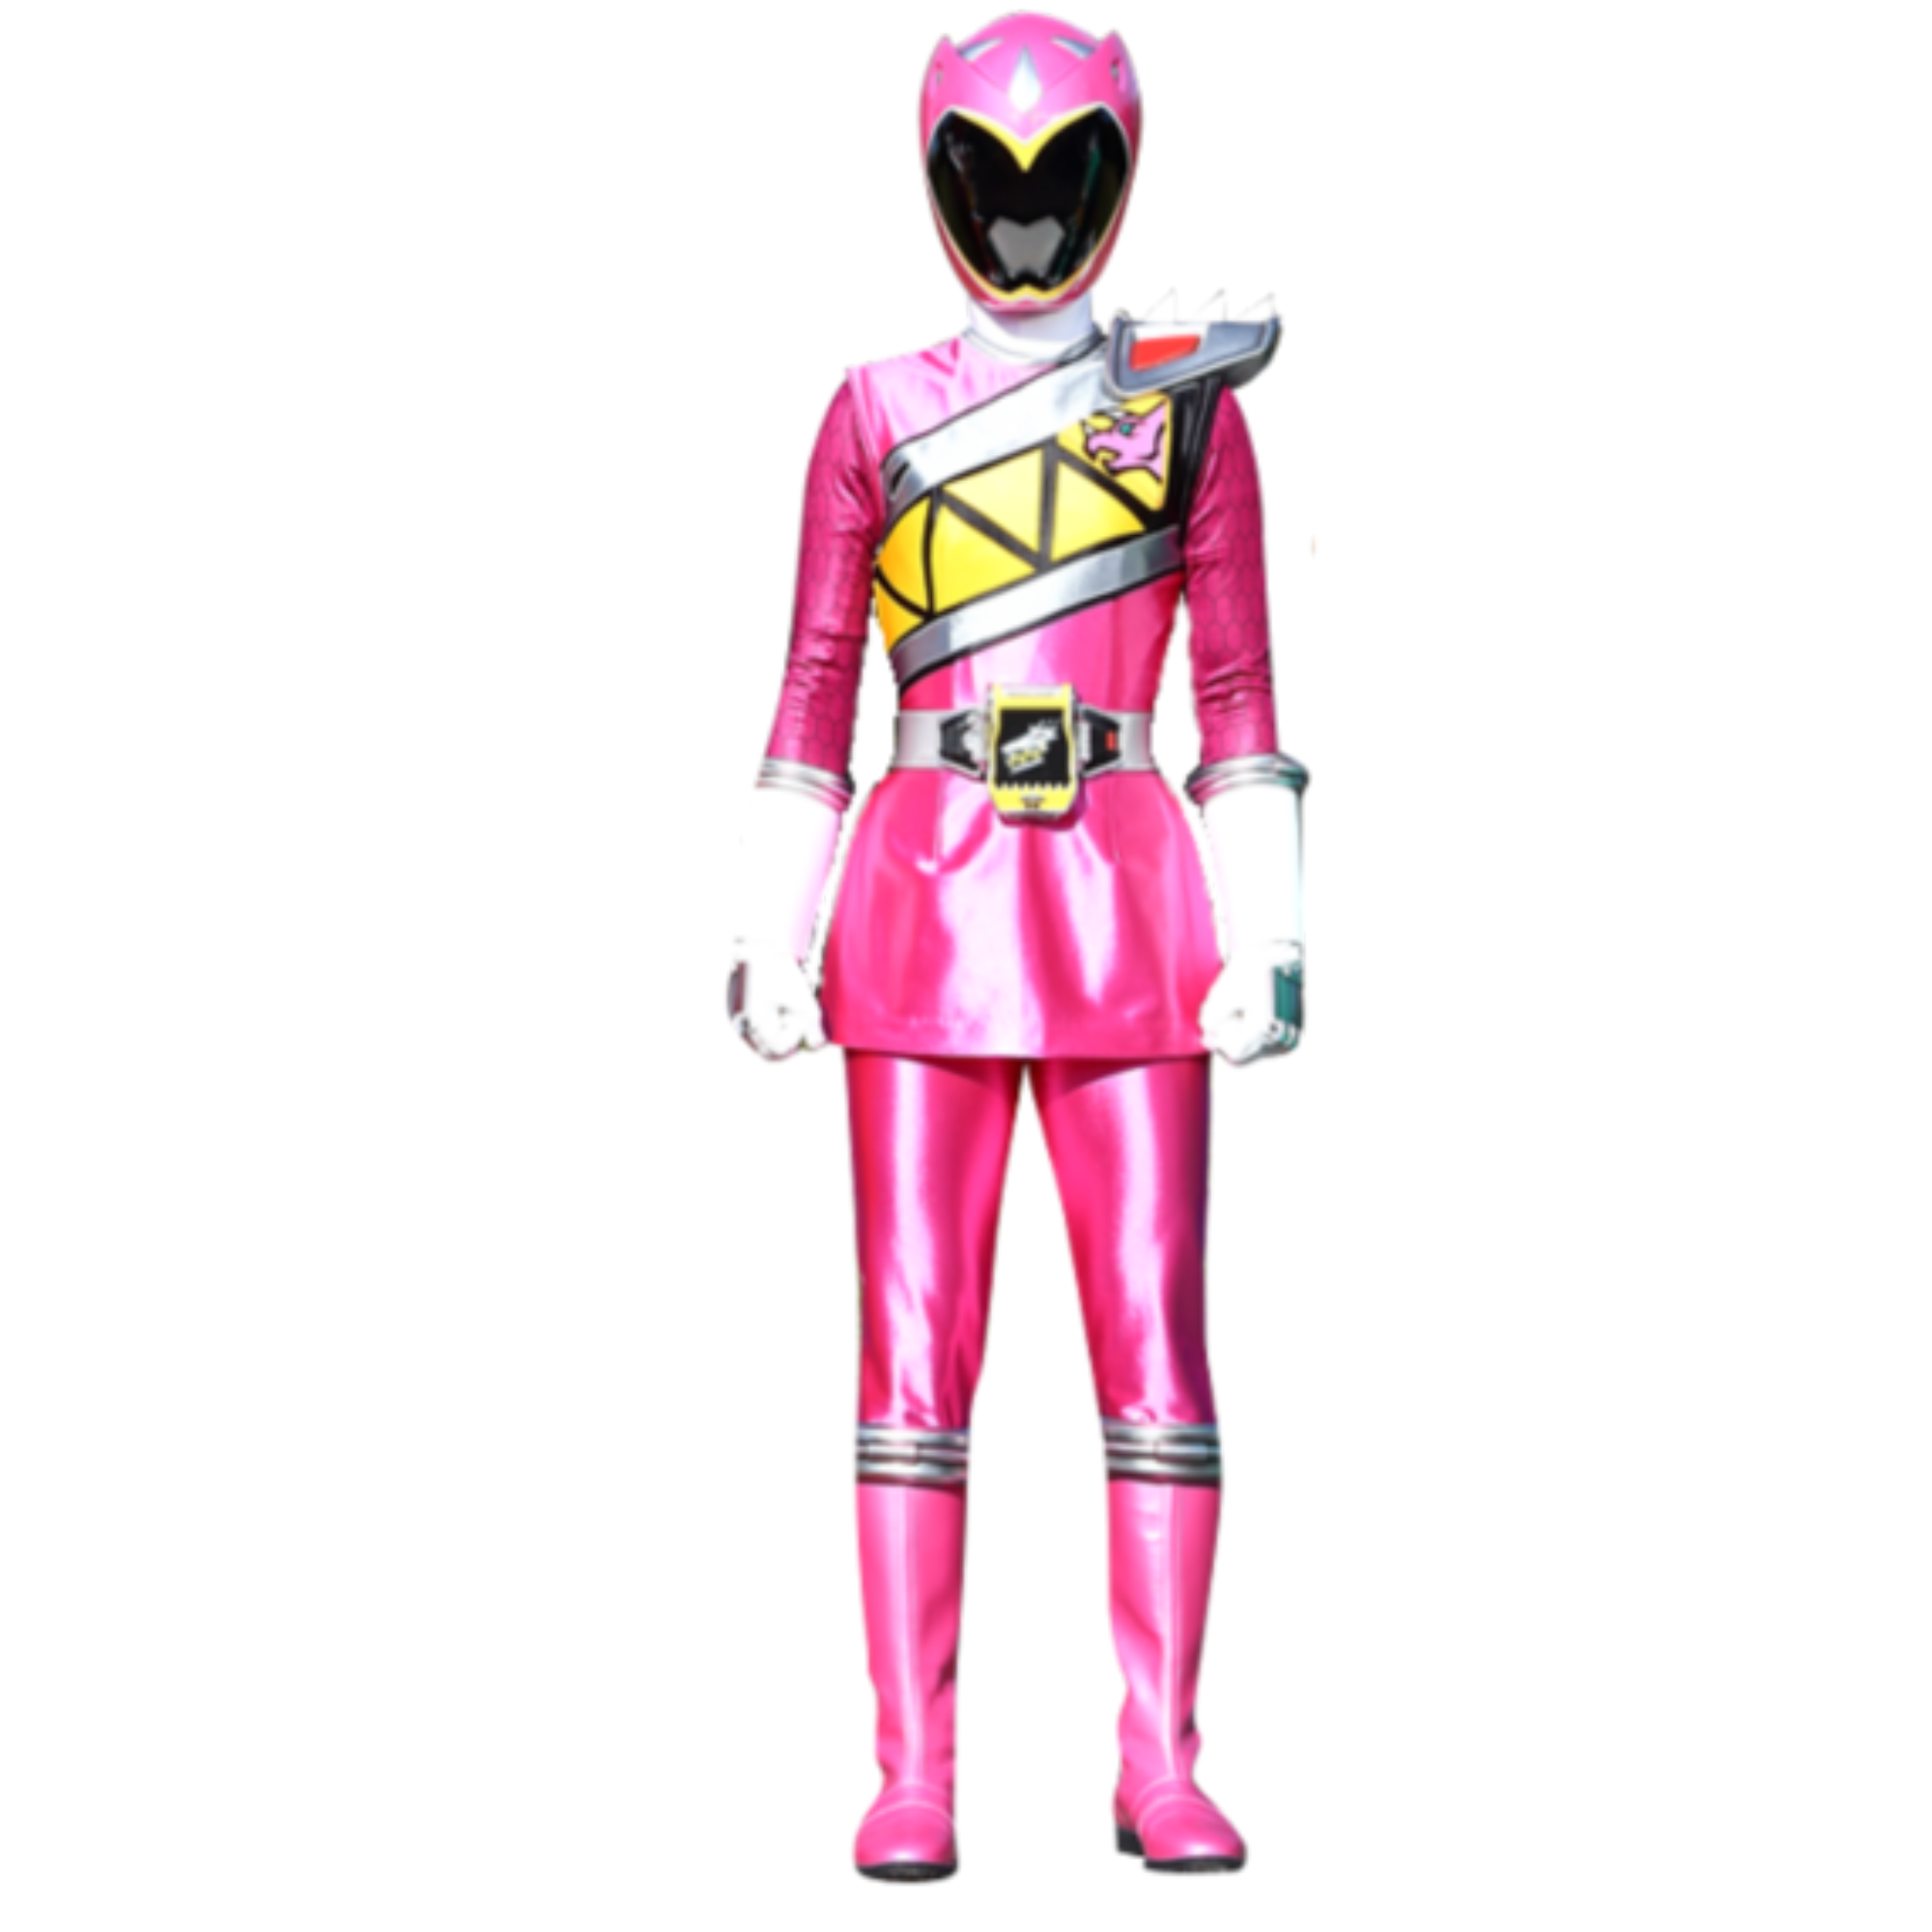 Power Rangers Dino charge розовый. Могучие рейнджеры Дино заряд розовый рейнджер. Розовый рейнджер Дино заряд. Могучие рейнджеры Dino заряд.